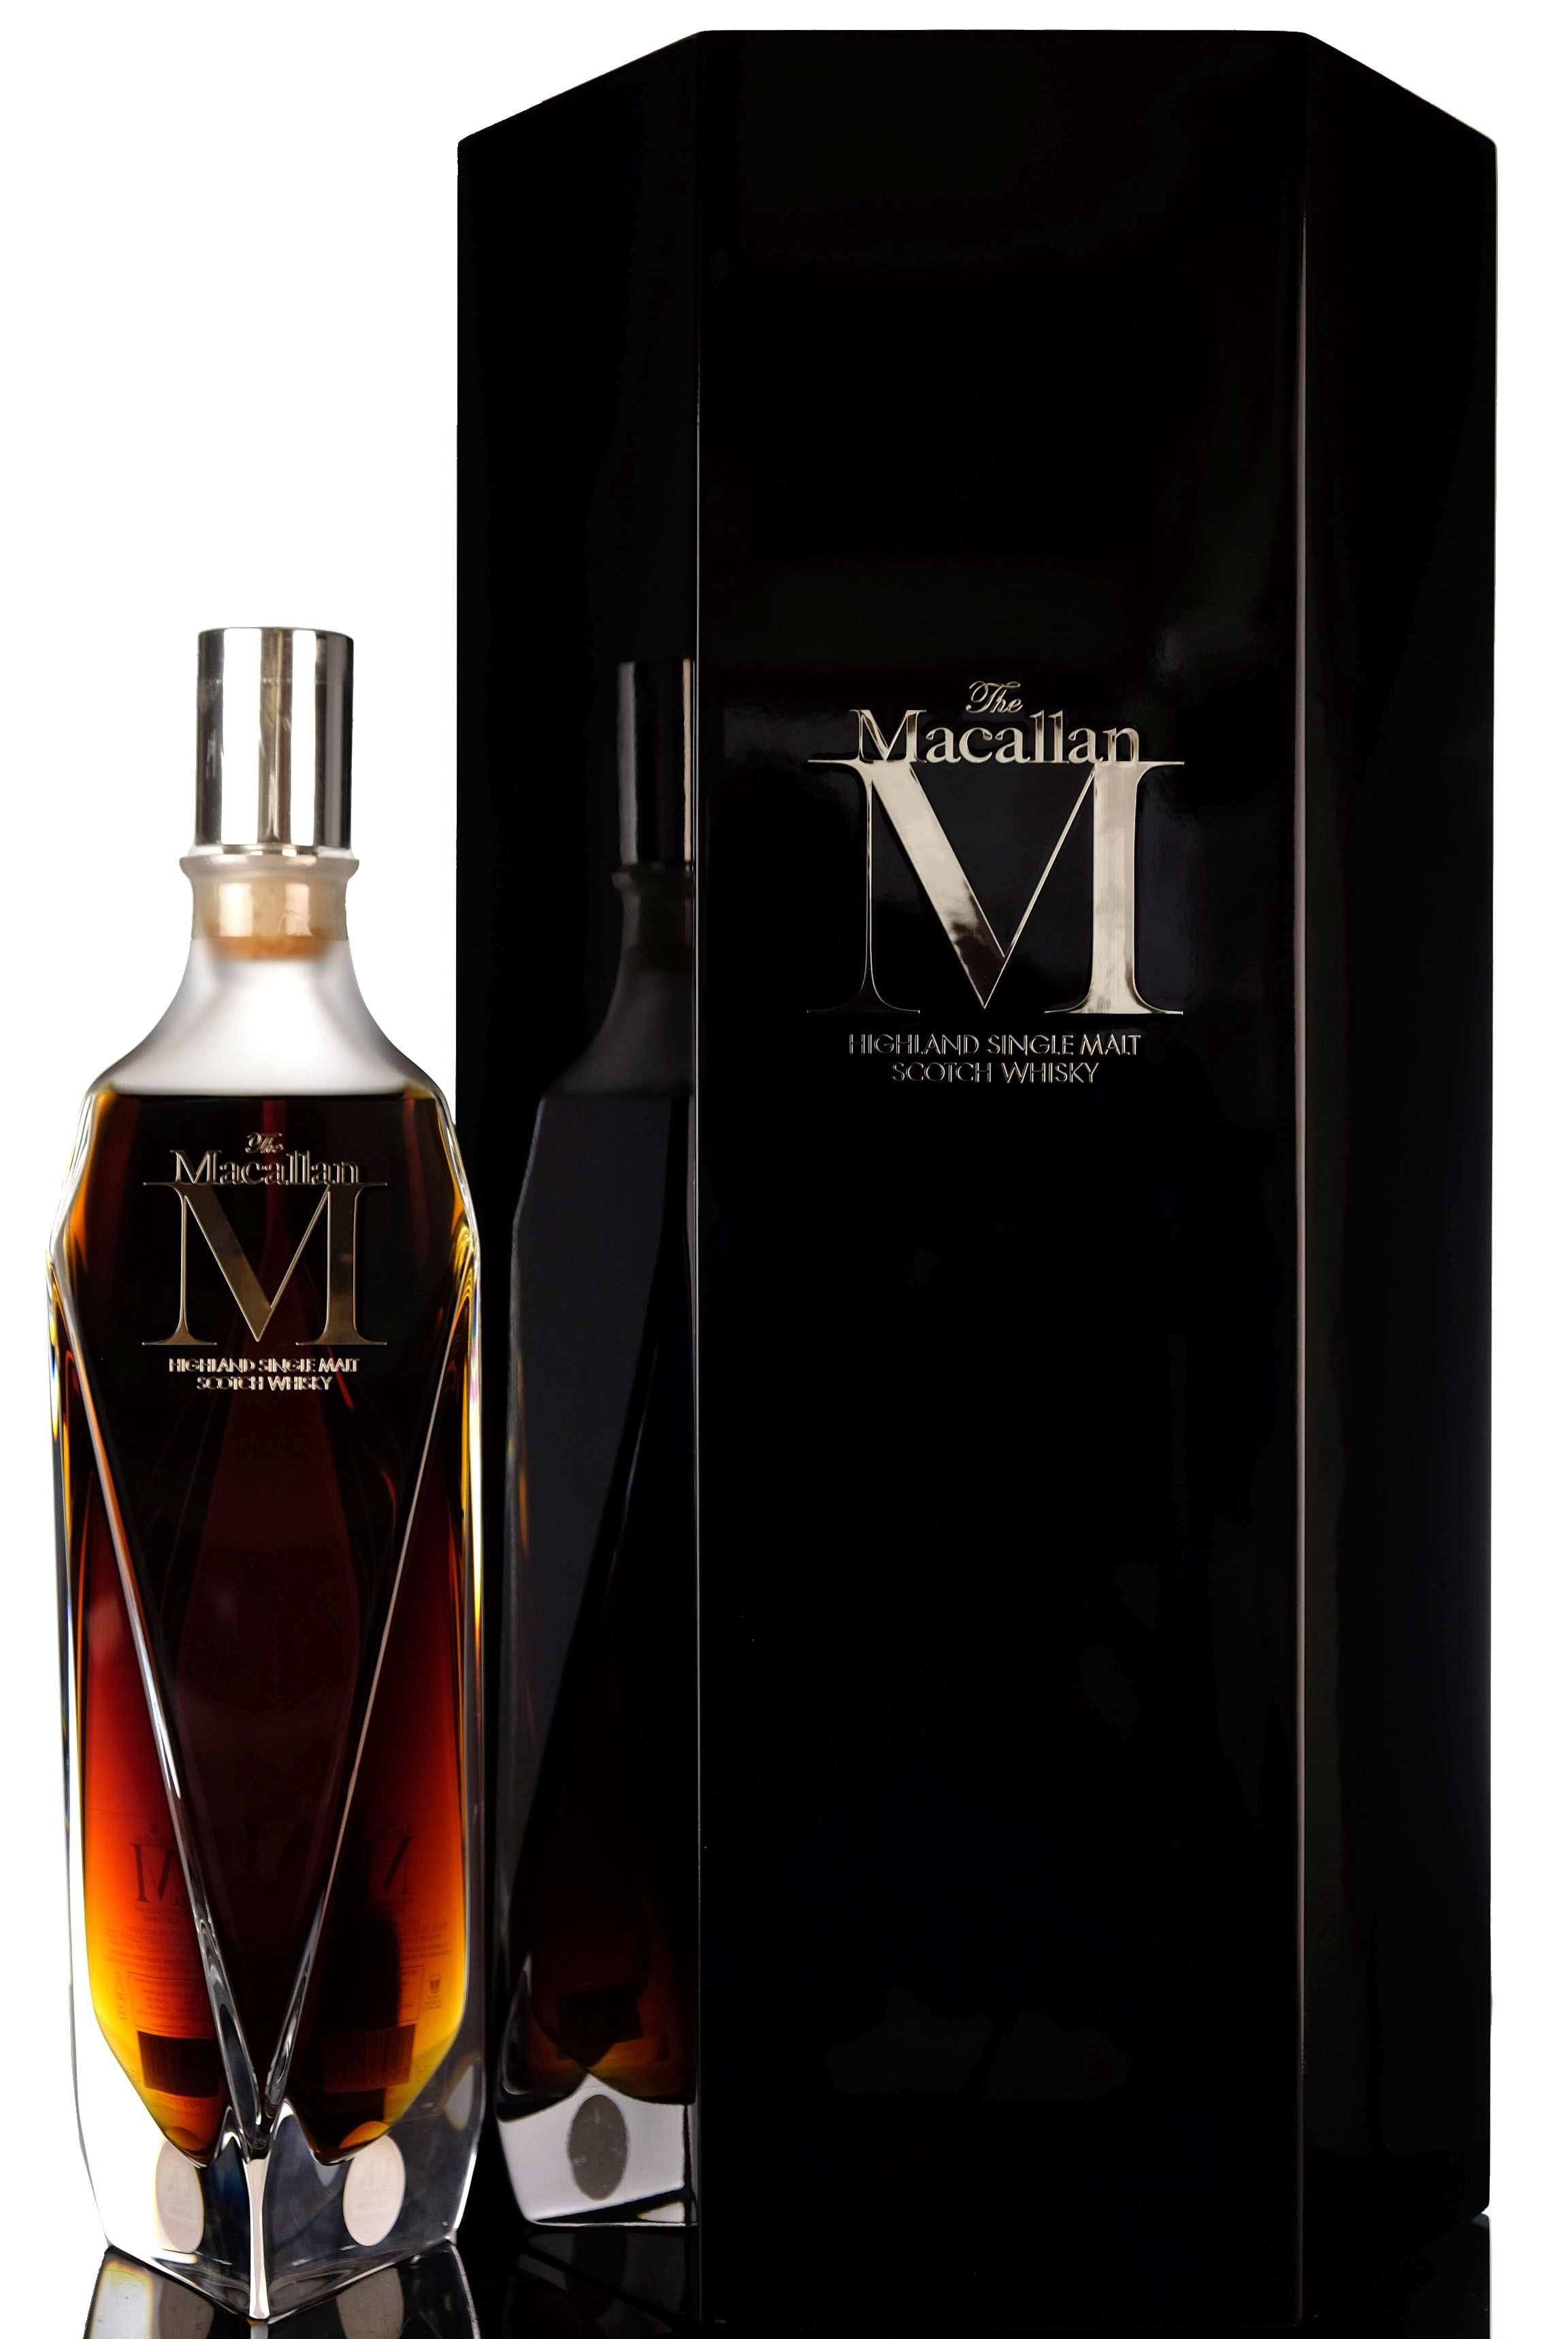 Macallan M Decanter - MMXIII - 2013 Release